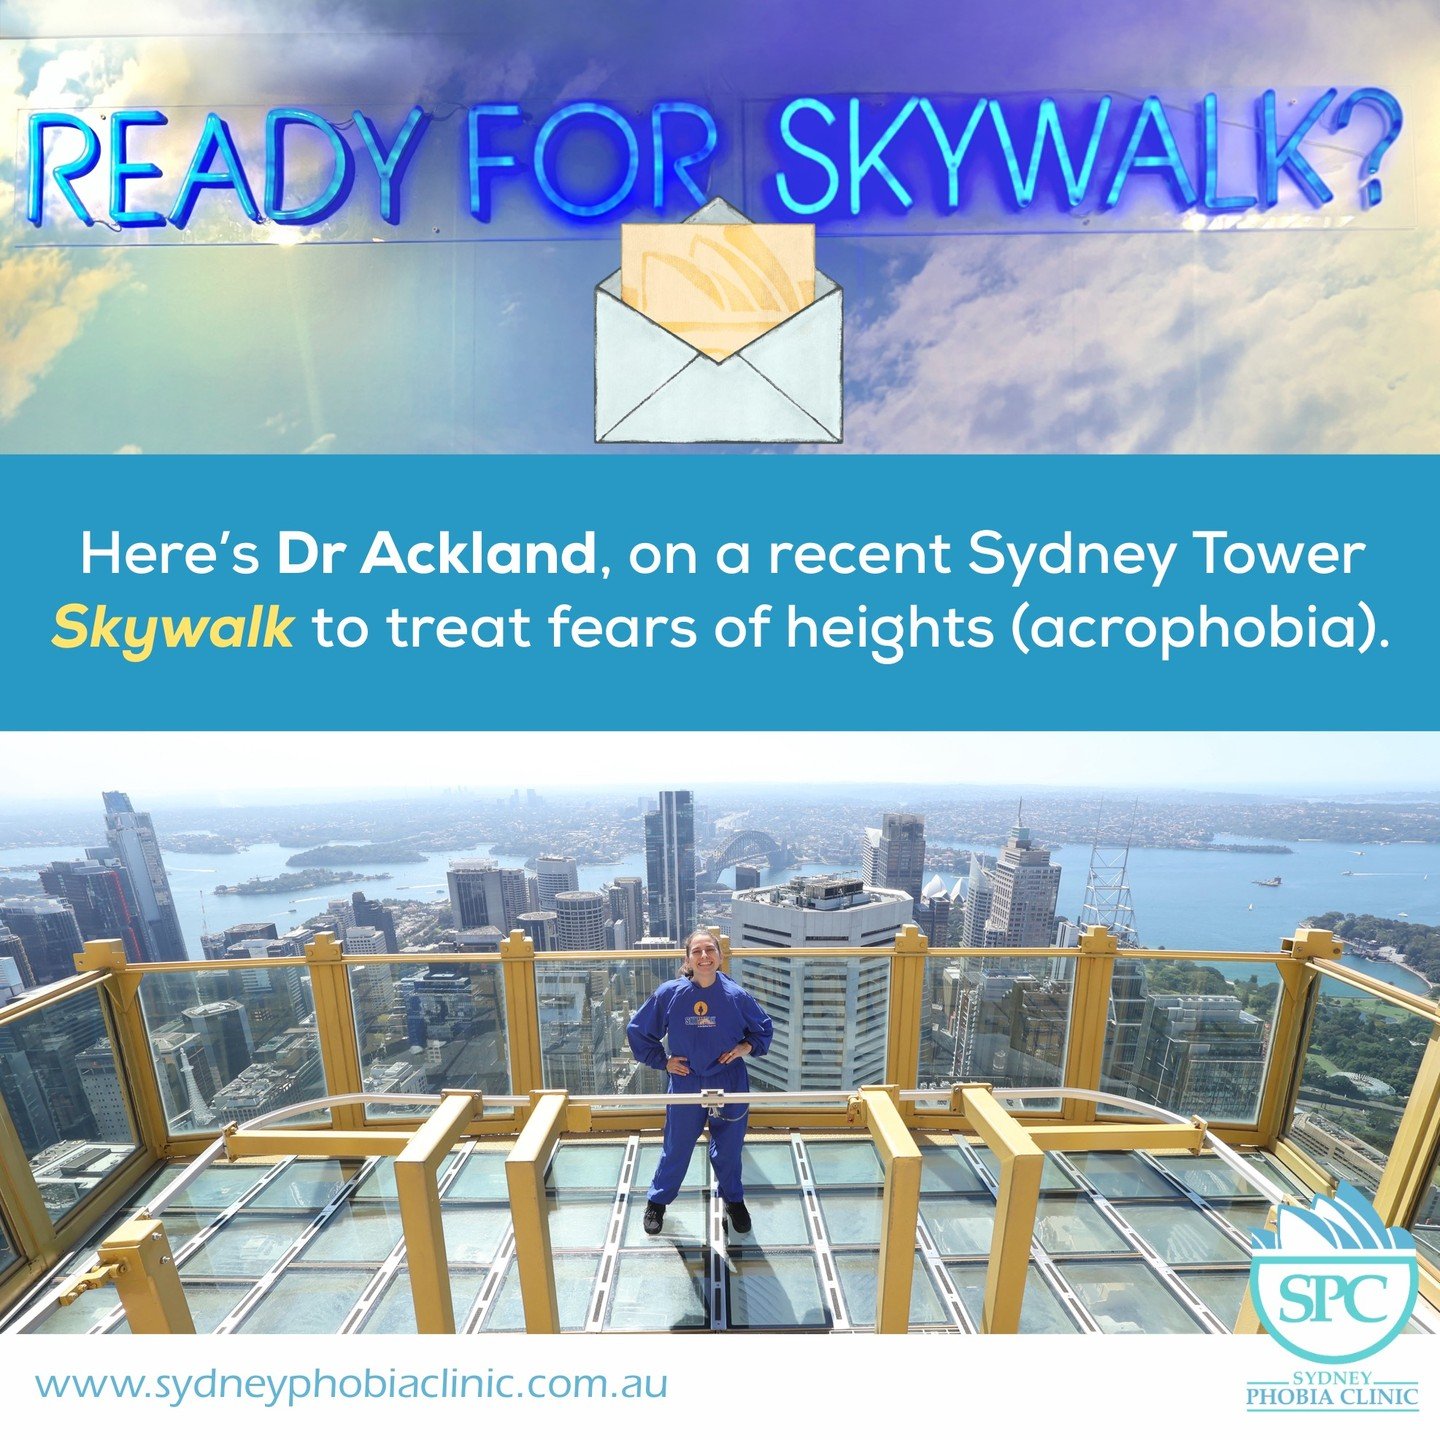 A recent Sydney Tower &rdquo;skywalk&rdquo;, to treat fears of heights. #sydneyphobiaclinic #phobias #phobia #fearofheights #acrophobia #skywalk #exposuretherapy #exposure #mentalhealth #psychologists #clinicalpsychologists #psychology #anxietydisord